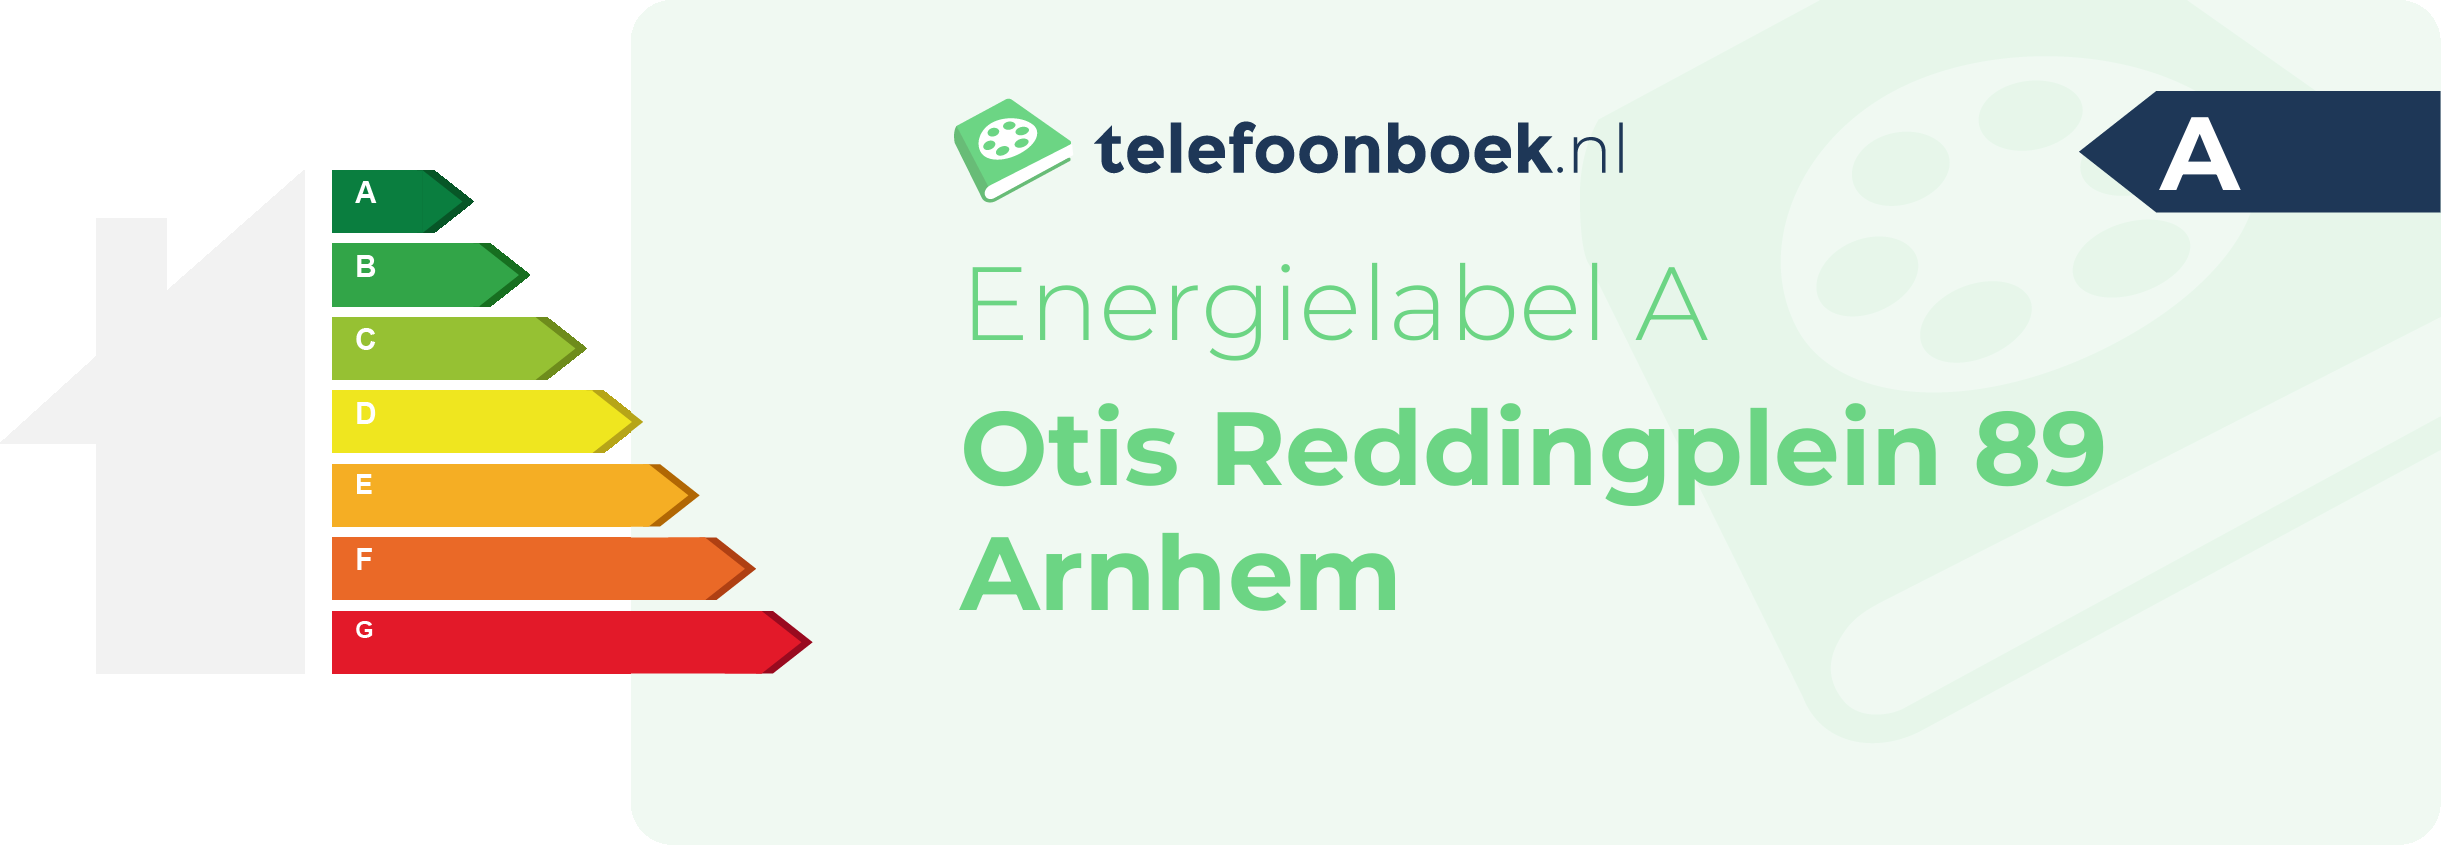 Energielabel Otis Reddingplein 89 Arnhem